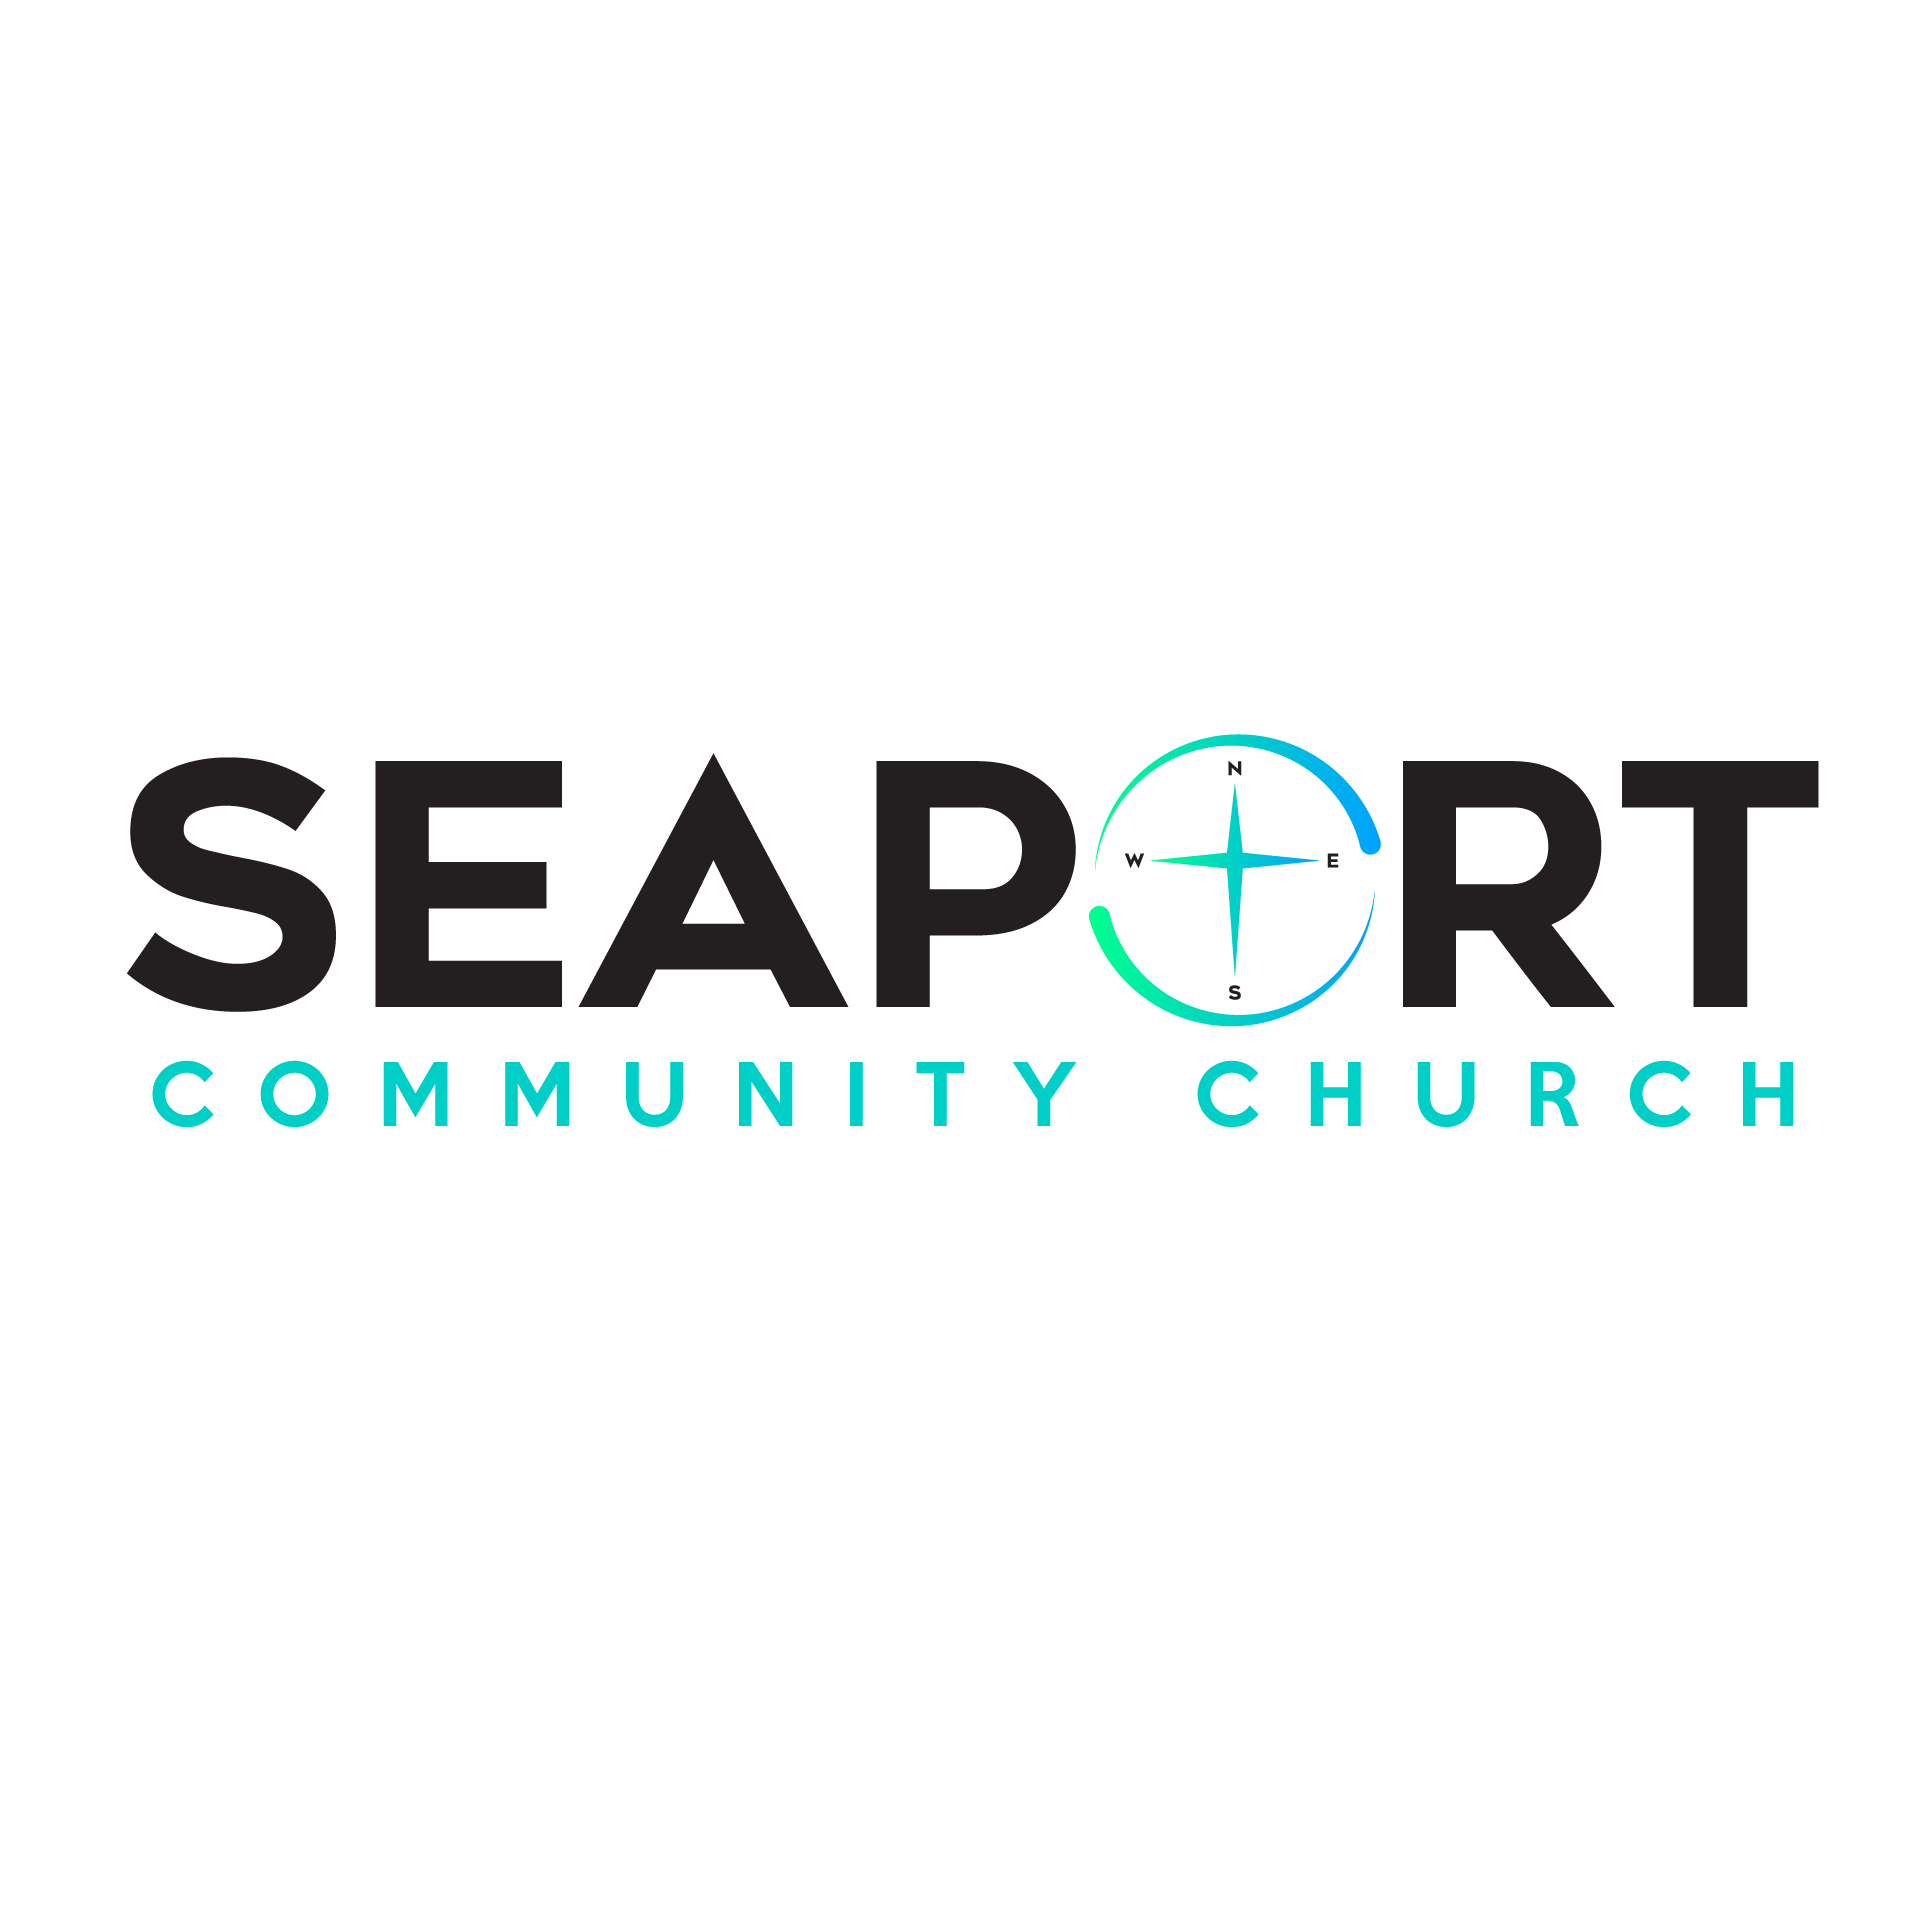 Seaport Community Church